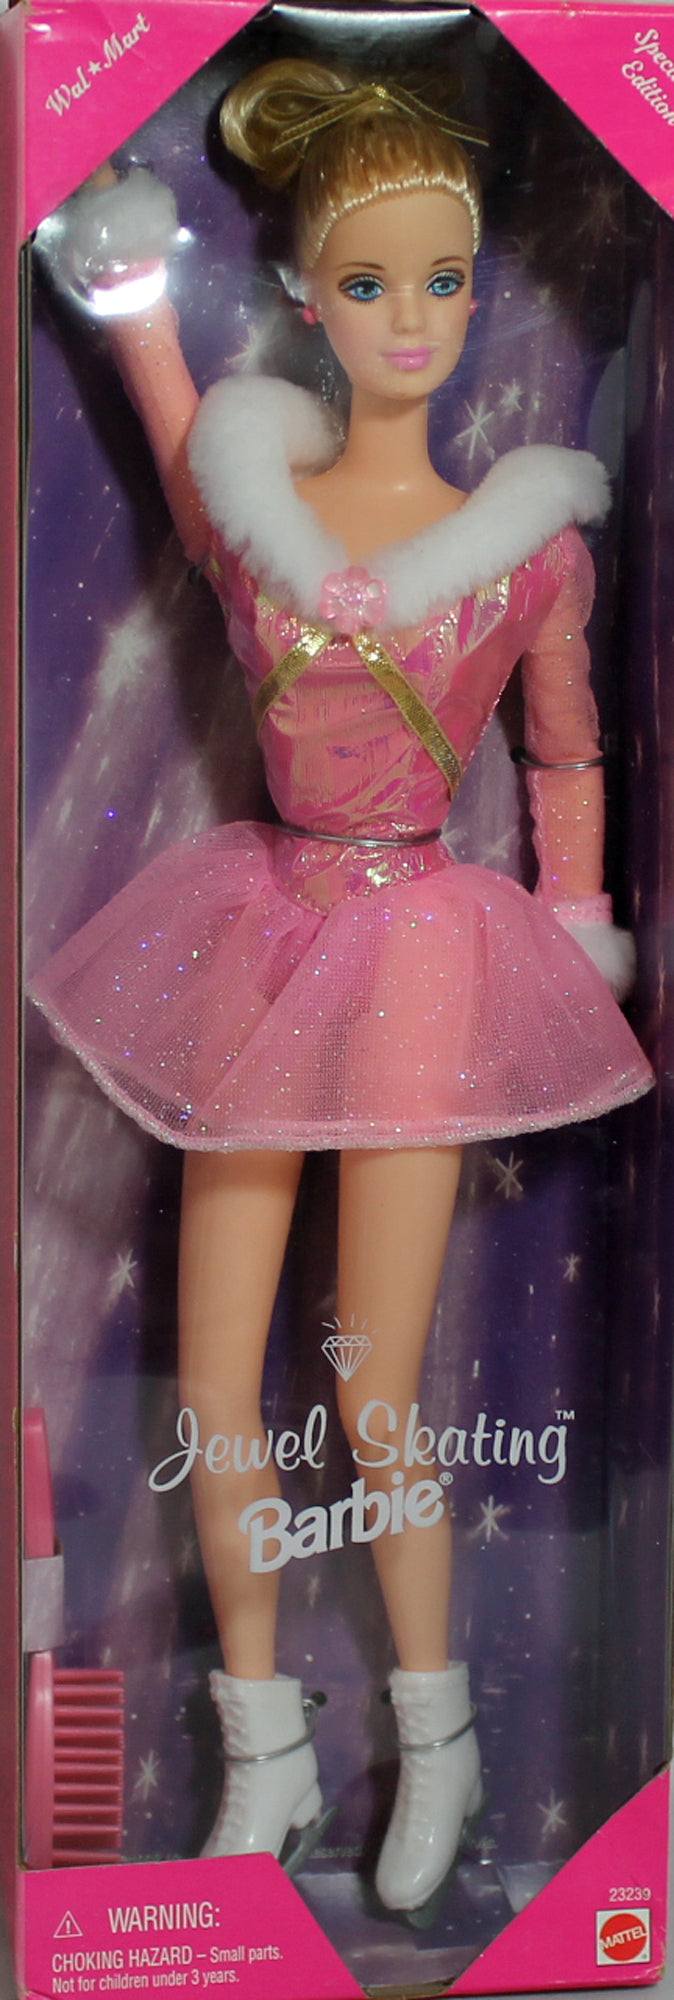 1998 Jewel Skating Barbie (23239)